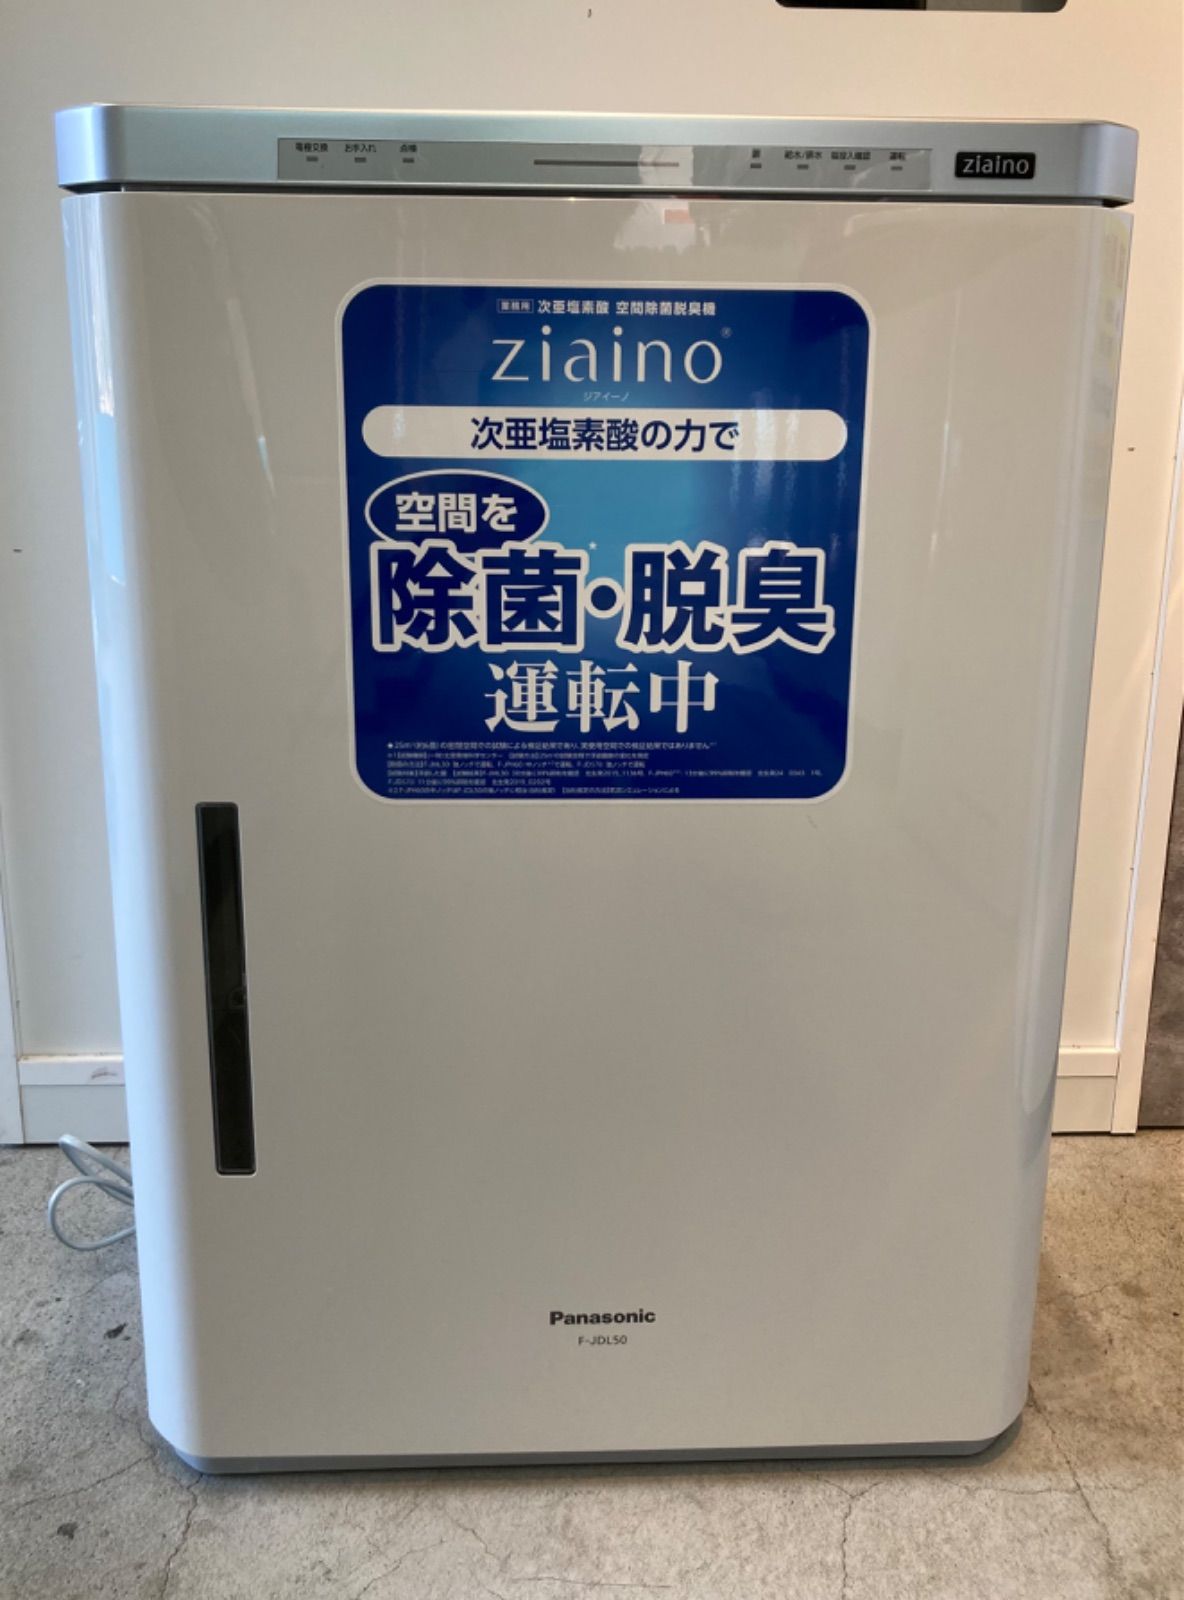 Panasonic F-JDL50-W 次亜塩素酸 空間除菌脱臭機空気清浄器